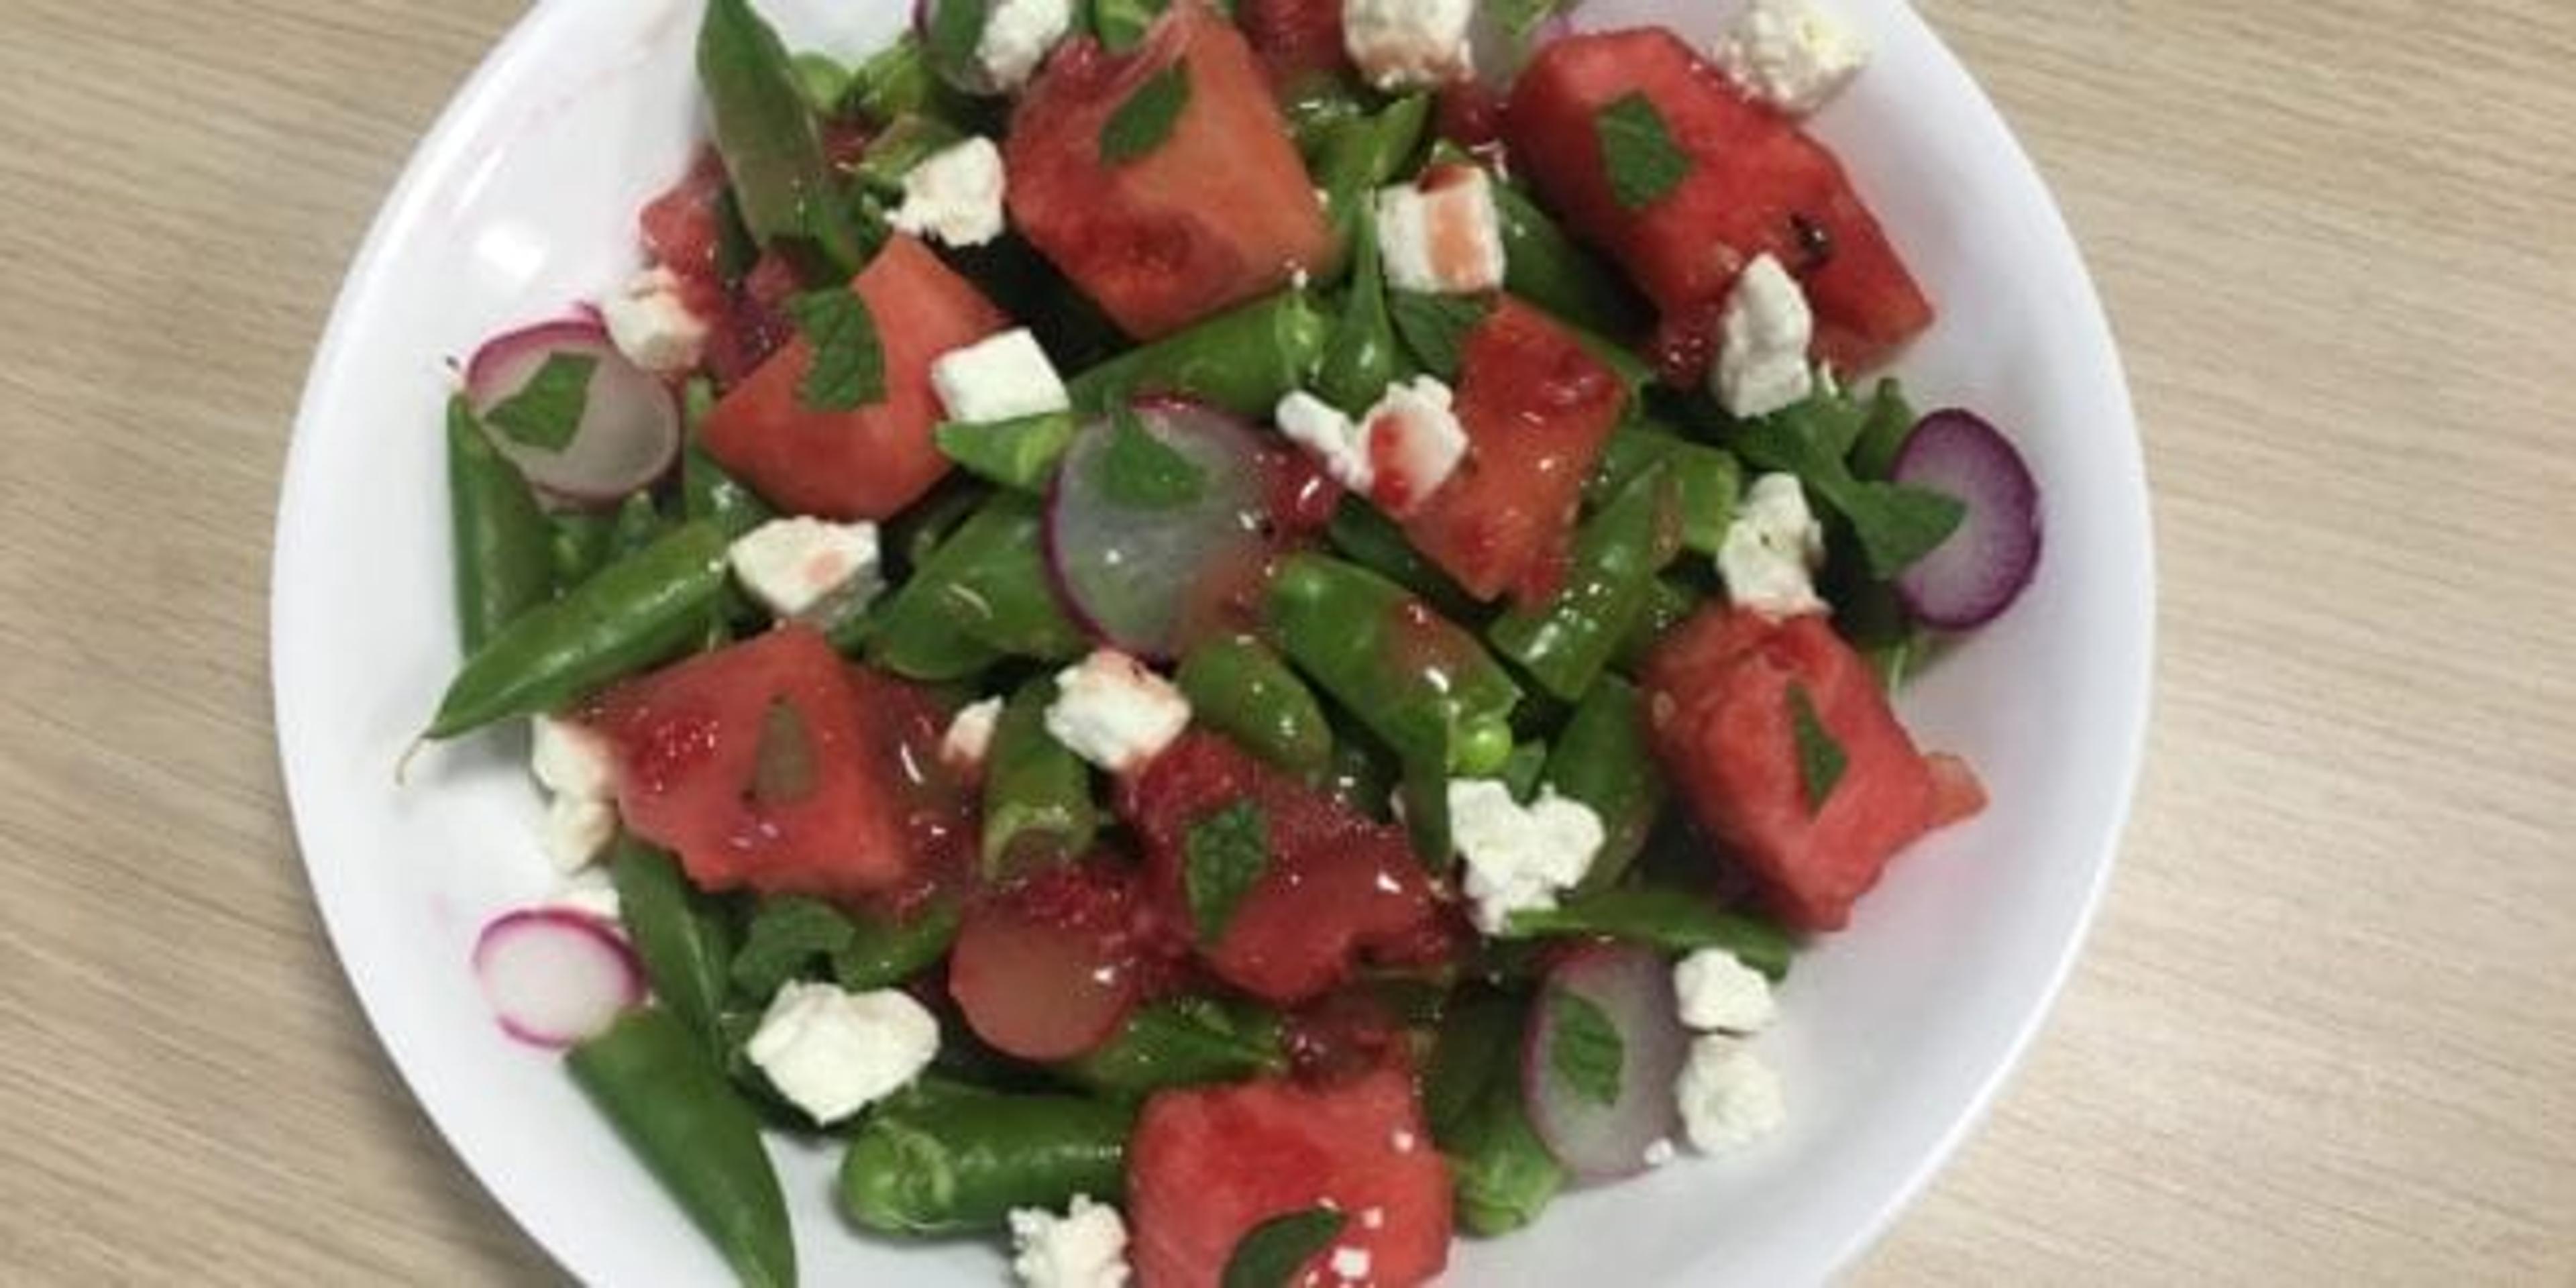 Watermelon Bend & Snap Pea Salad with Raspberry Vinaigrette